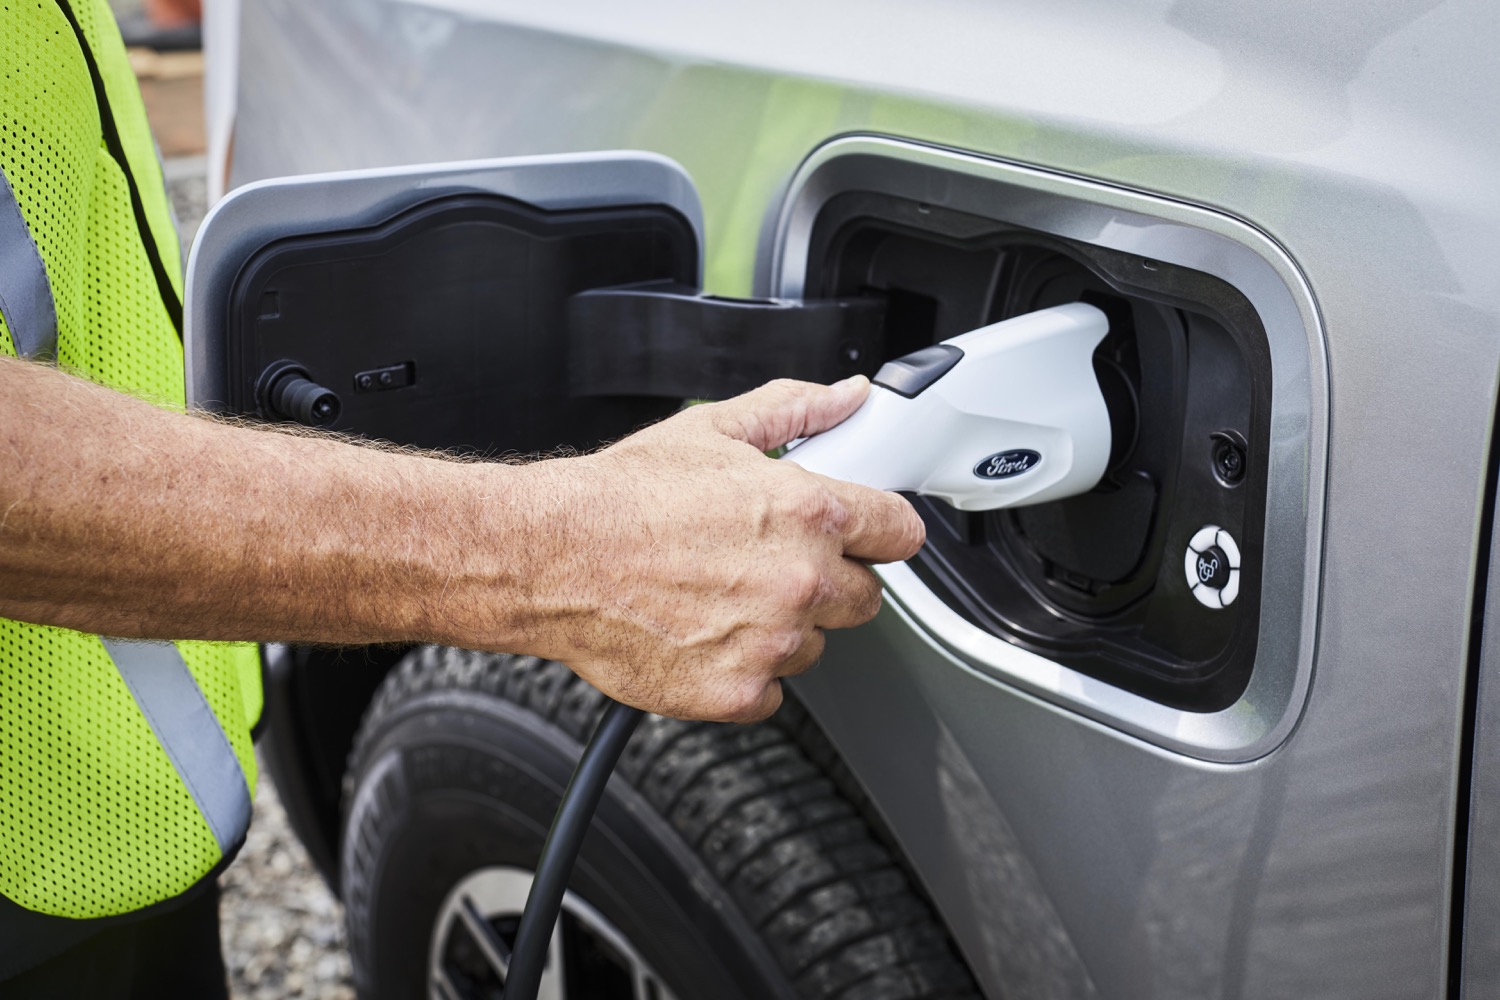 TESTED: 2022 BMW iX SUV Crushes EPA Range Estimate in the Real World